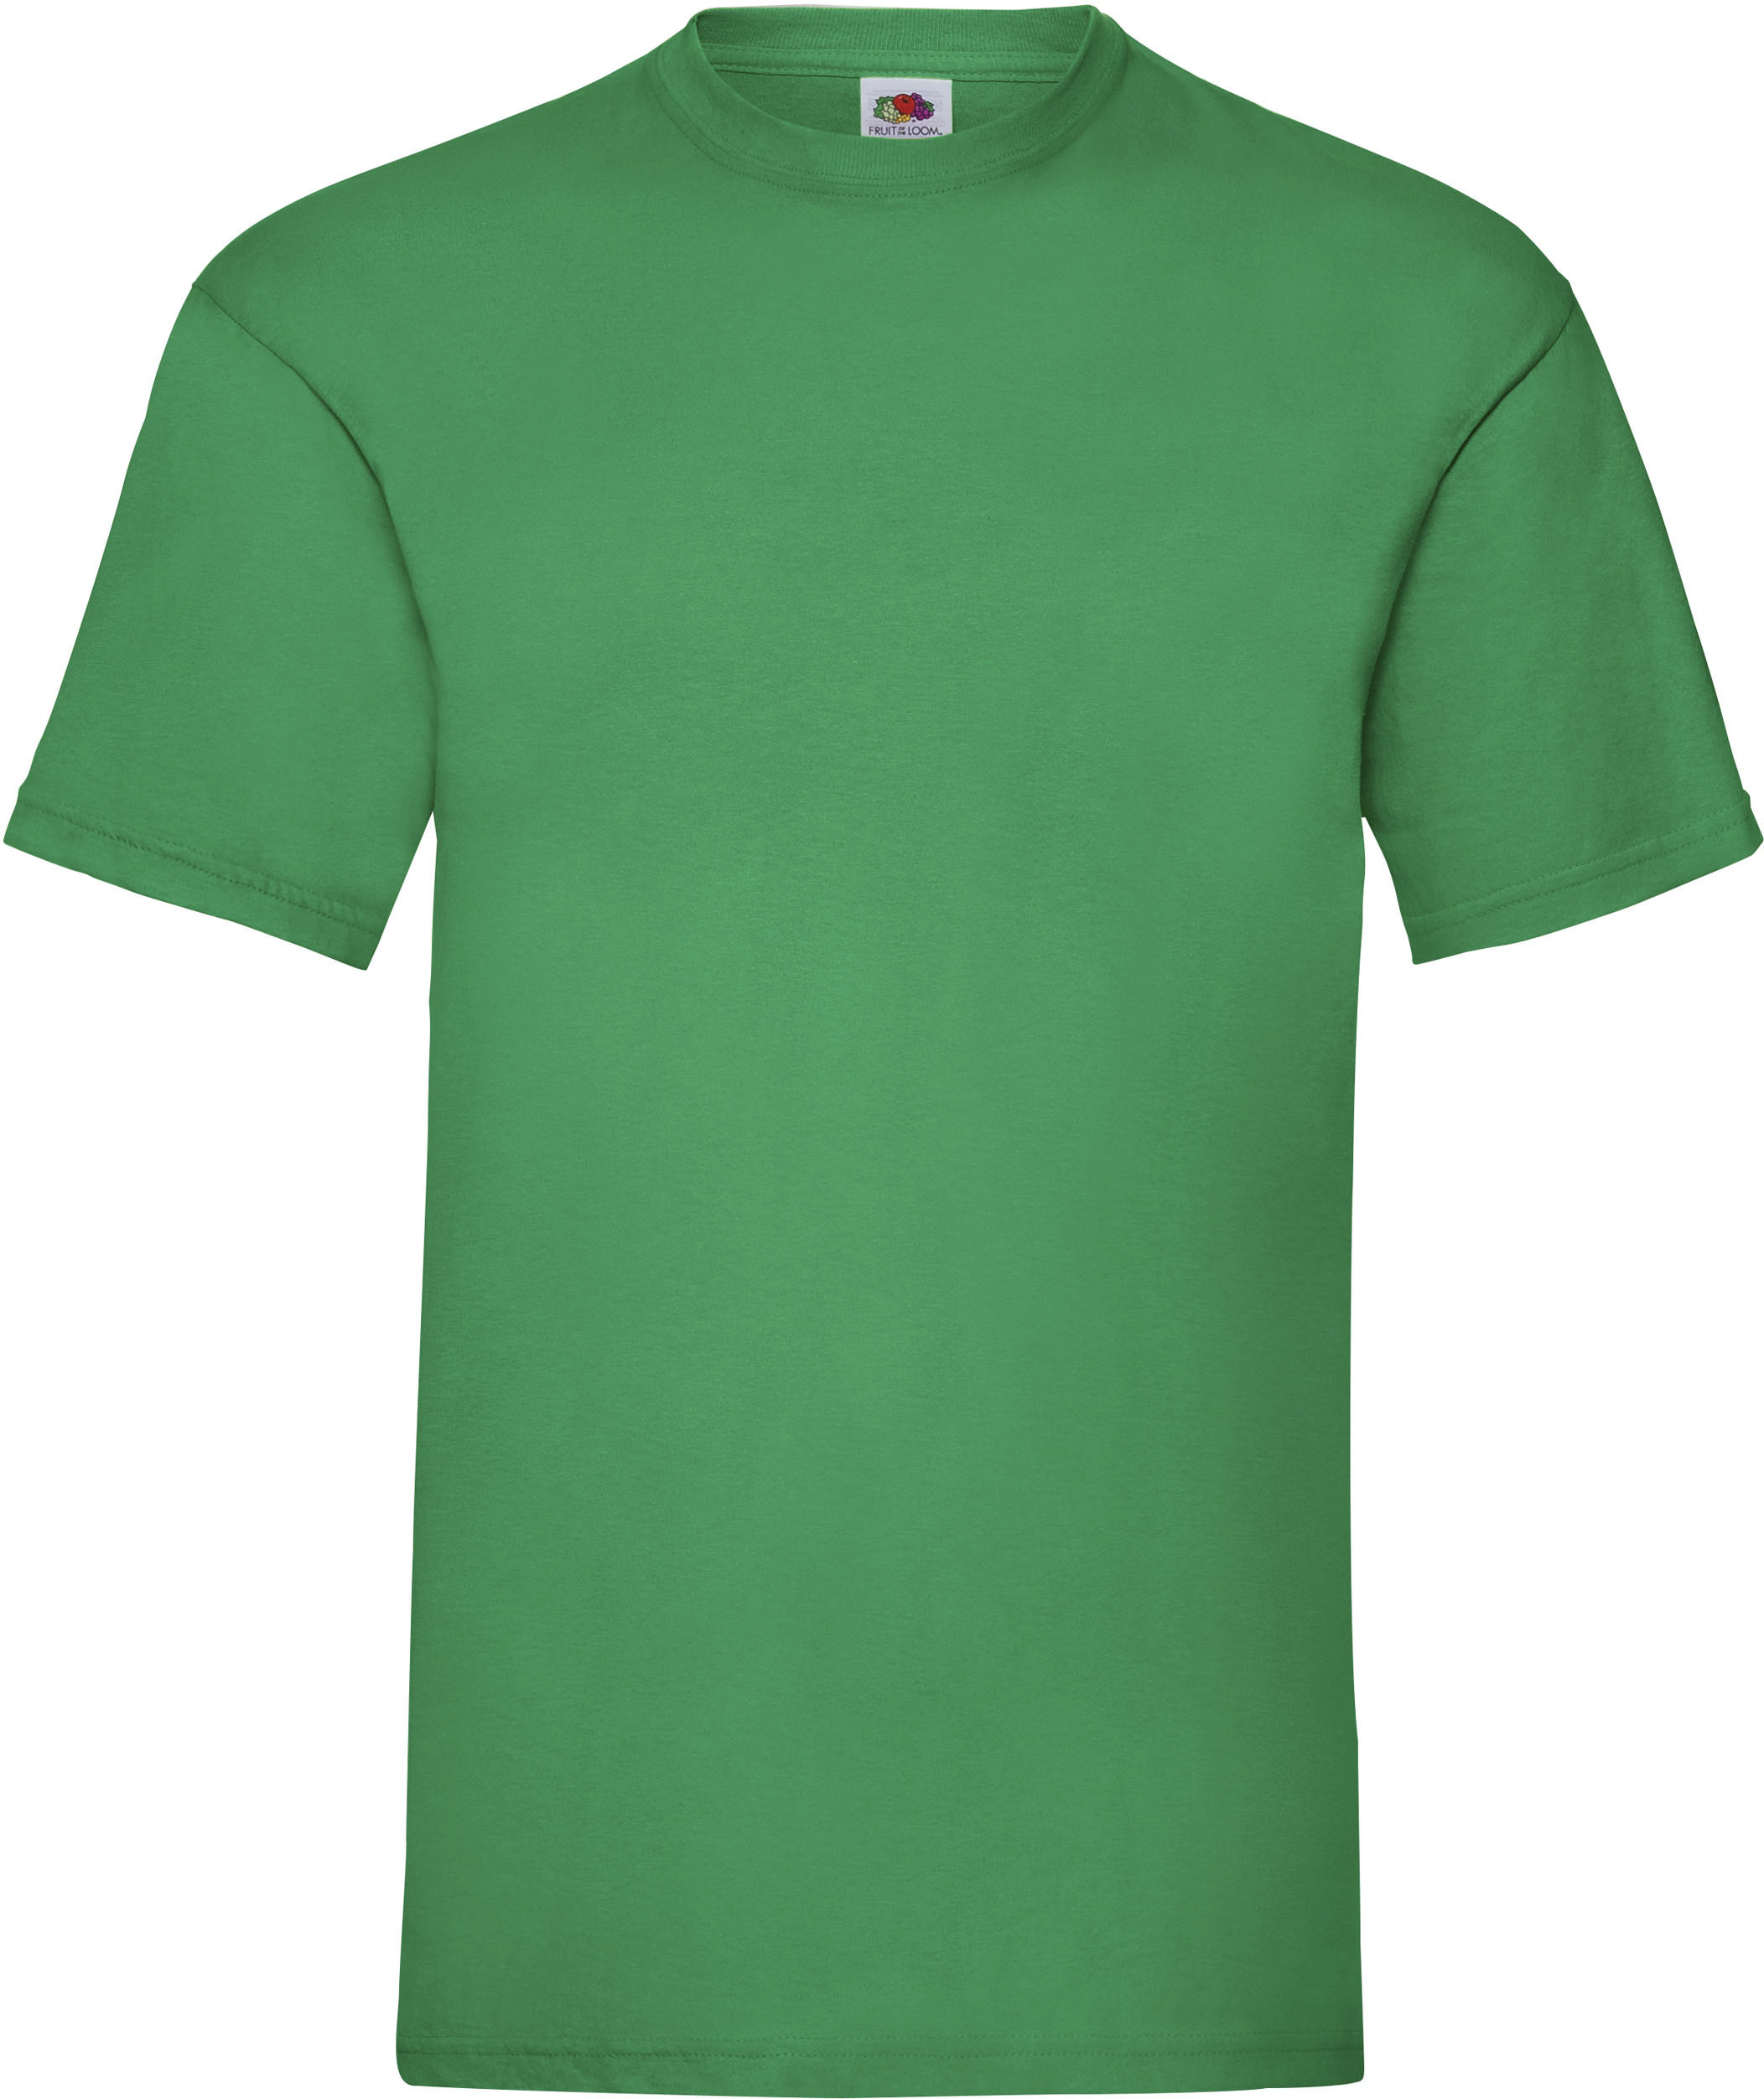 camiseta_personalizada_sc221_verde_kelly